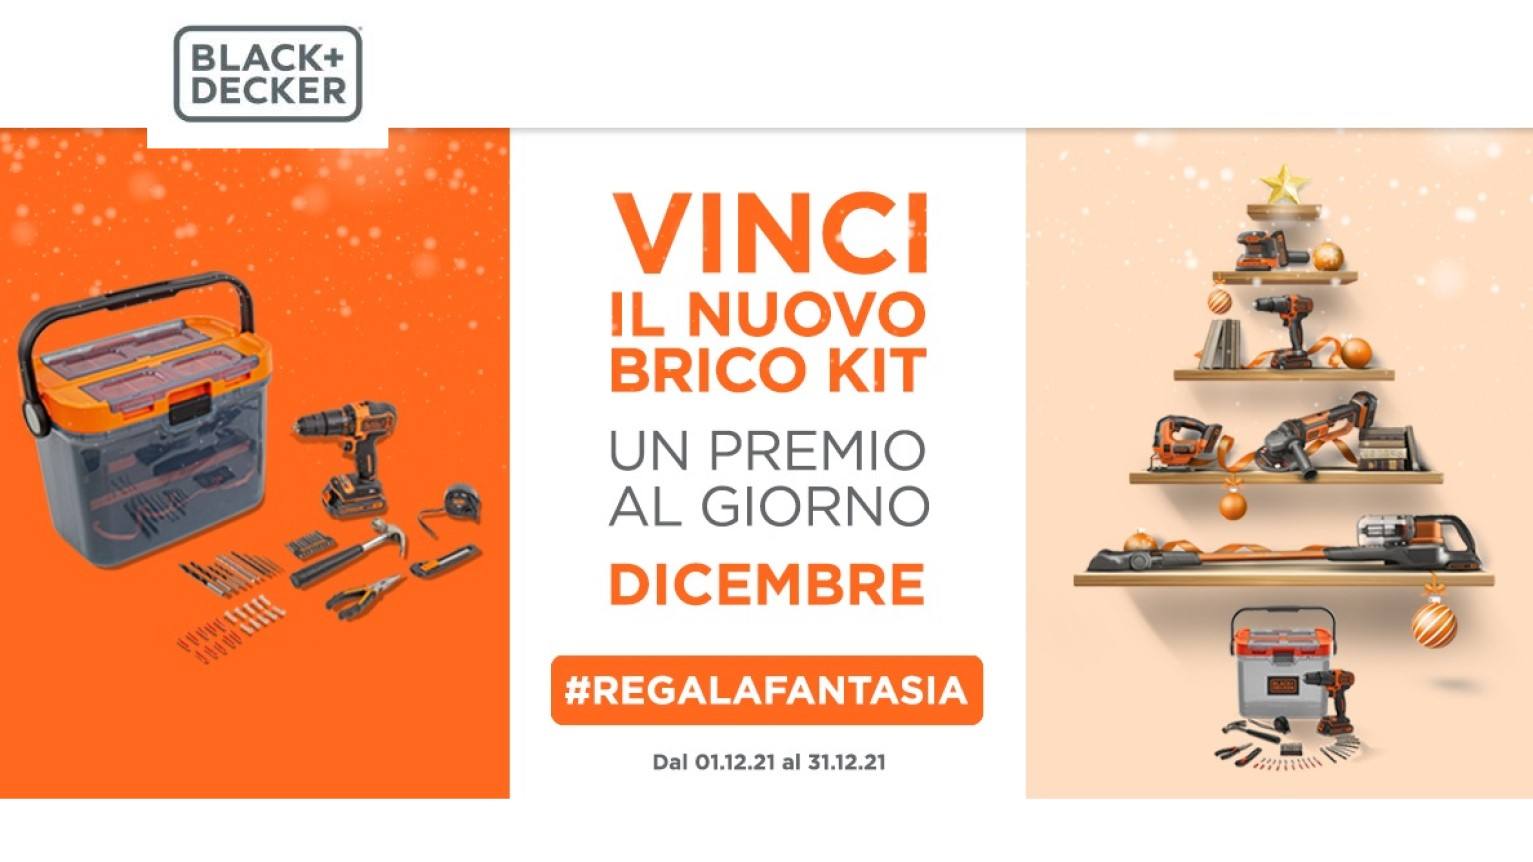 Calendario dell'Avvento Black+Decker 2021 Regala Fantasia vinci 31 Brico Kit